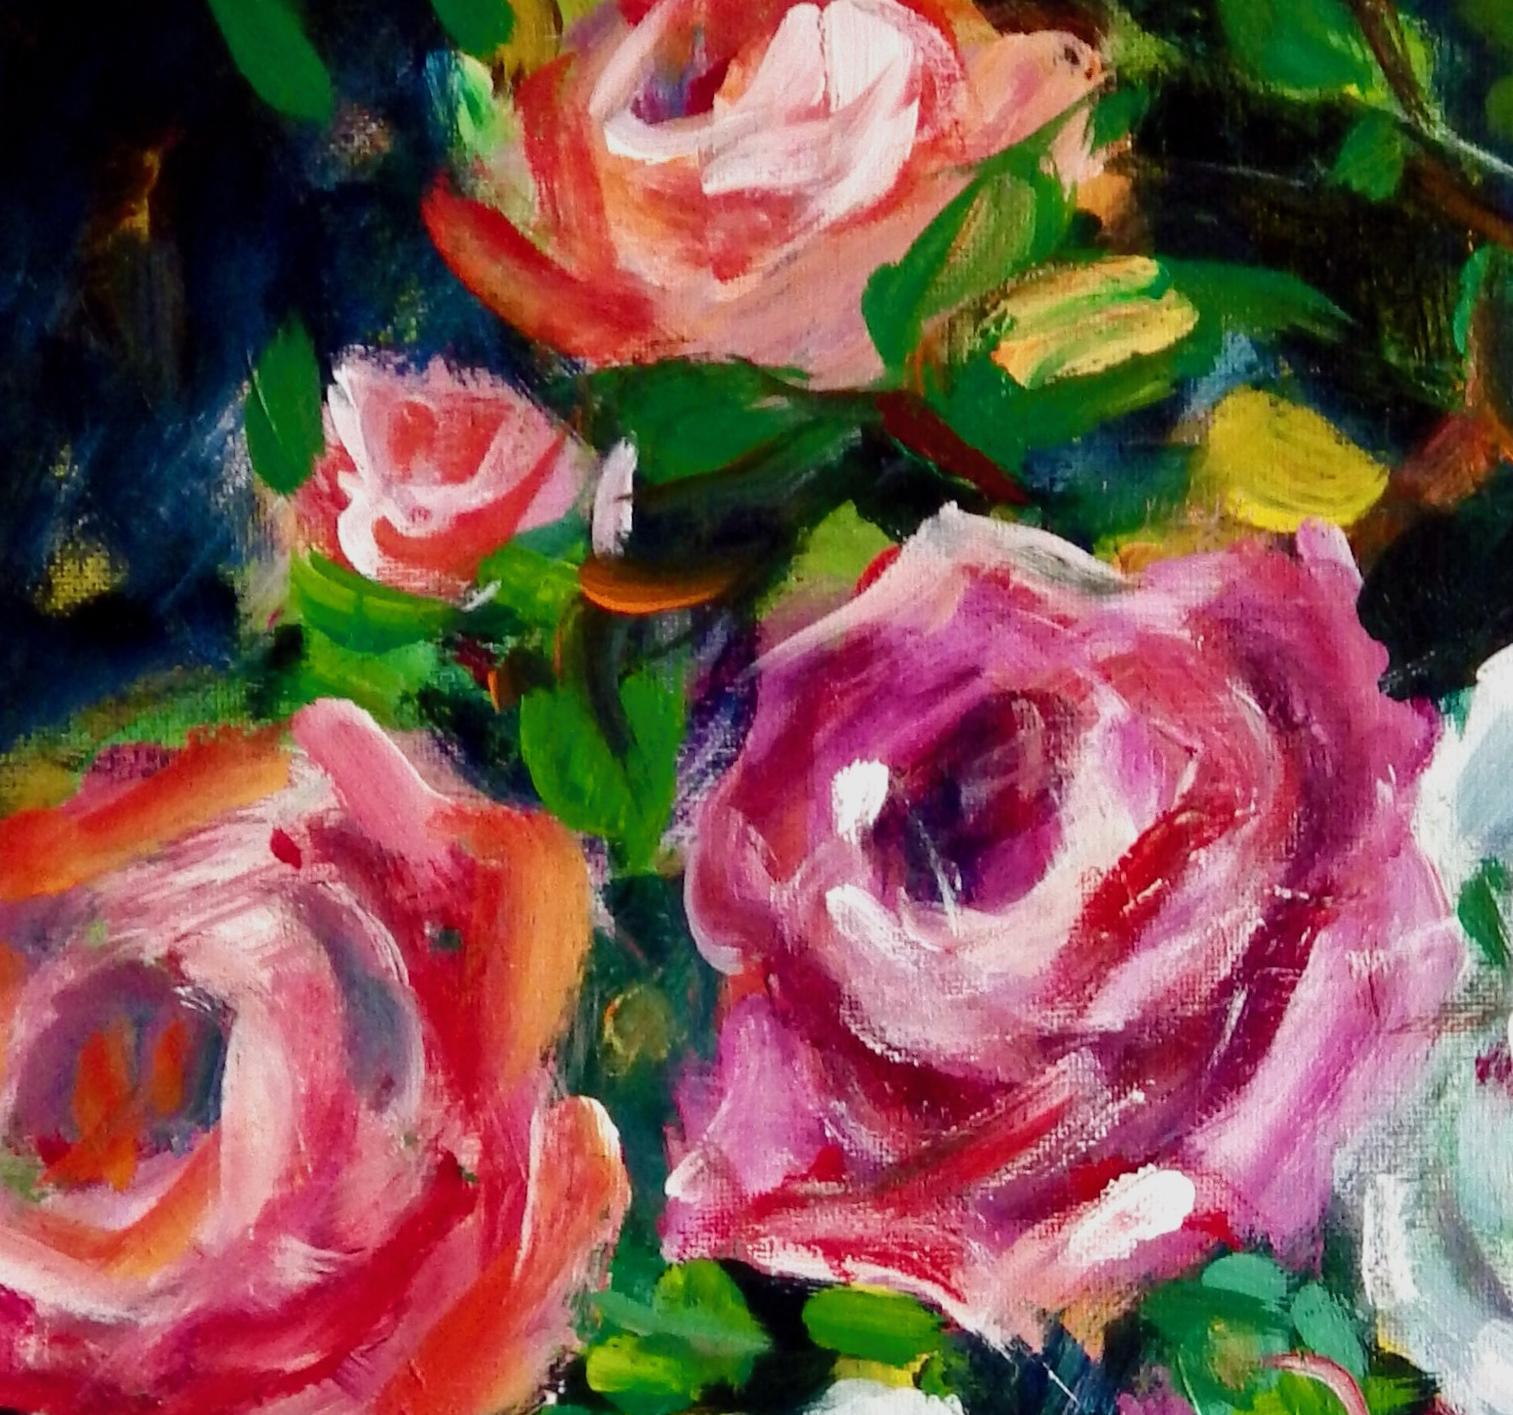 Roses, Original Impressionist Floral Still Life Painting, 2020
20